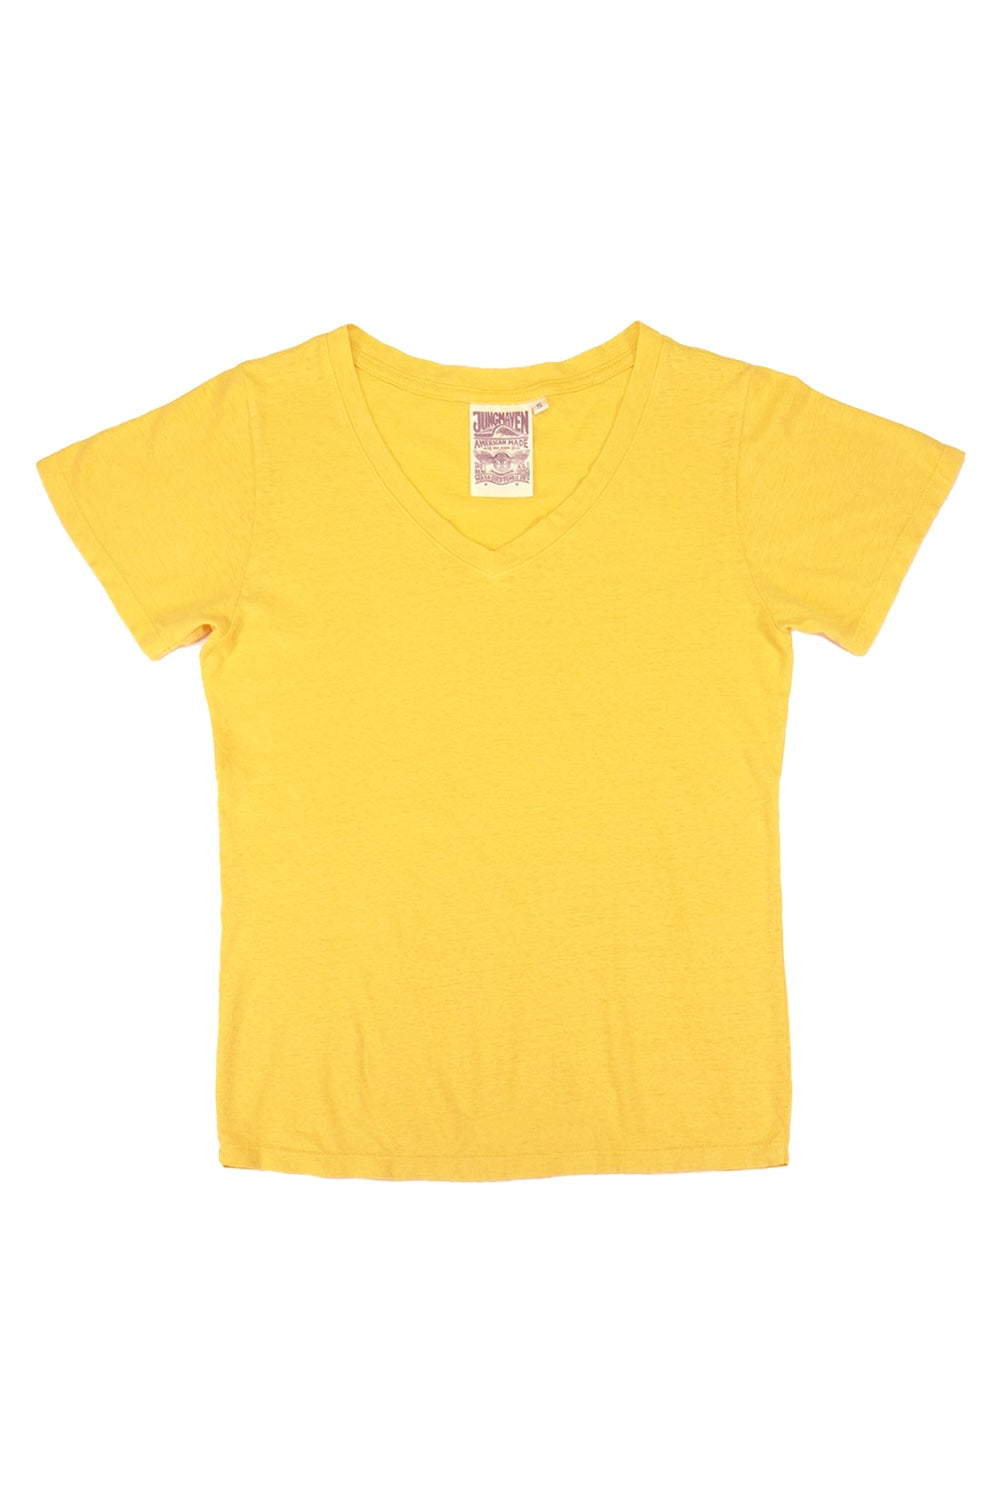 Paige V-neck | Jungmaven Hemp Clothing & Accessories / Color: Sunshine Yellow